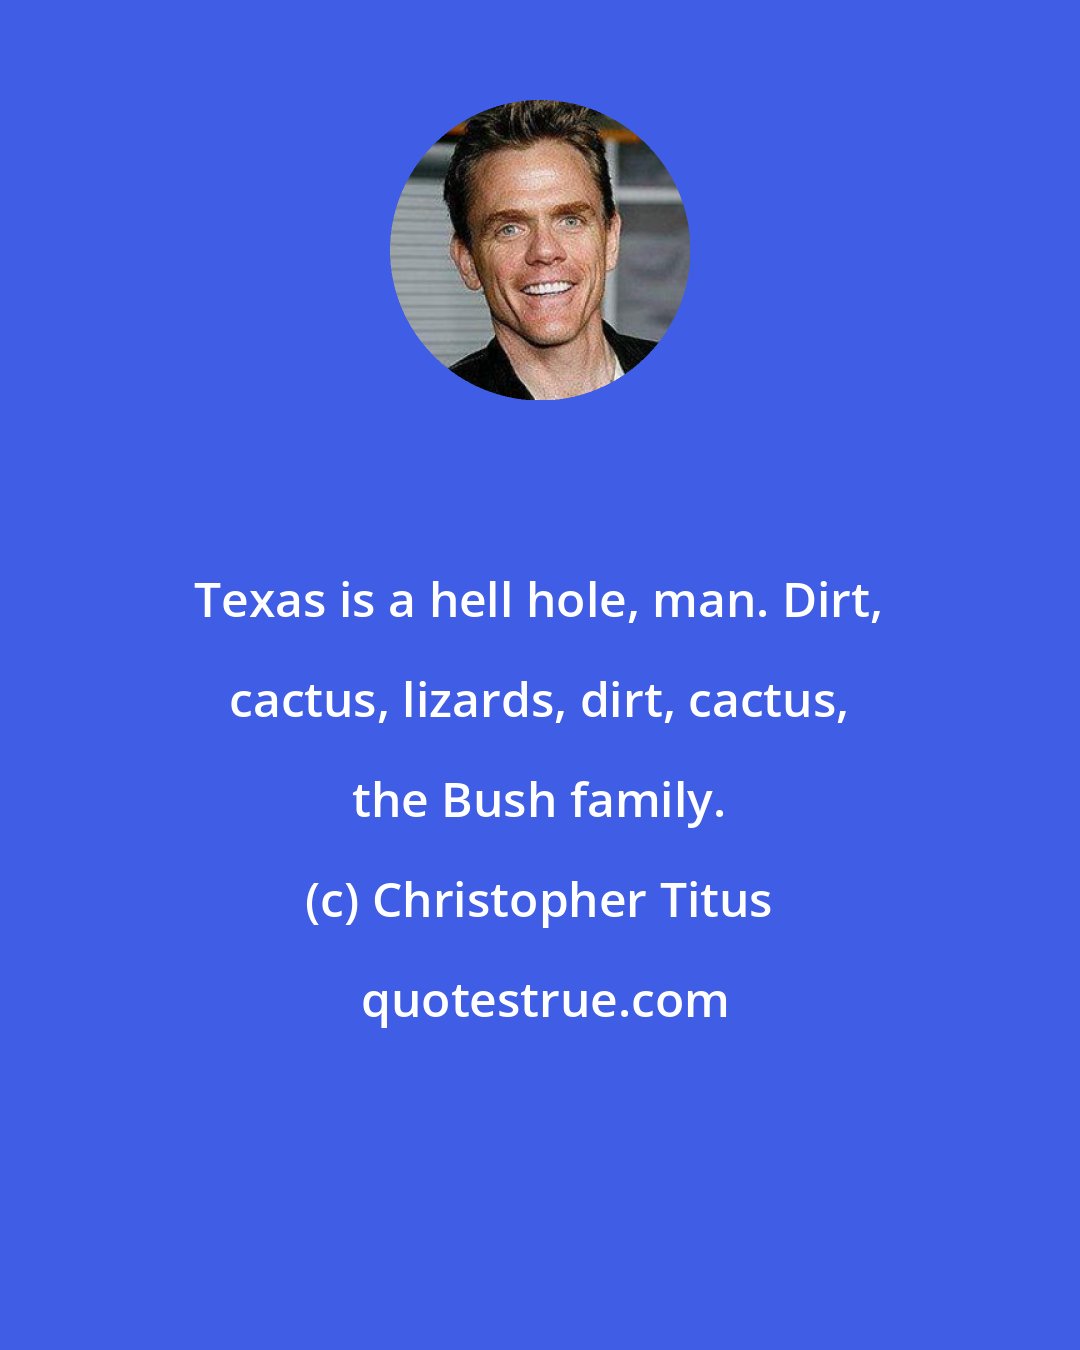 Christopher Titus: Texas is a hell hole, man. Dirt, cactus, lizards, dirt, cactus, the Bush family.